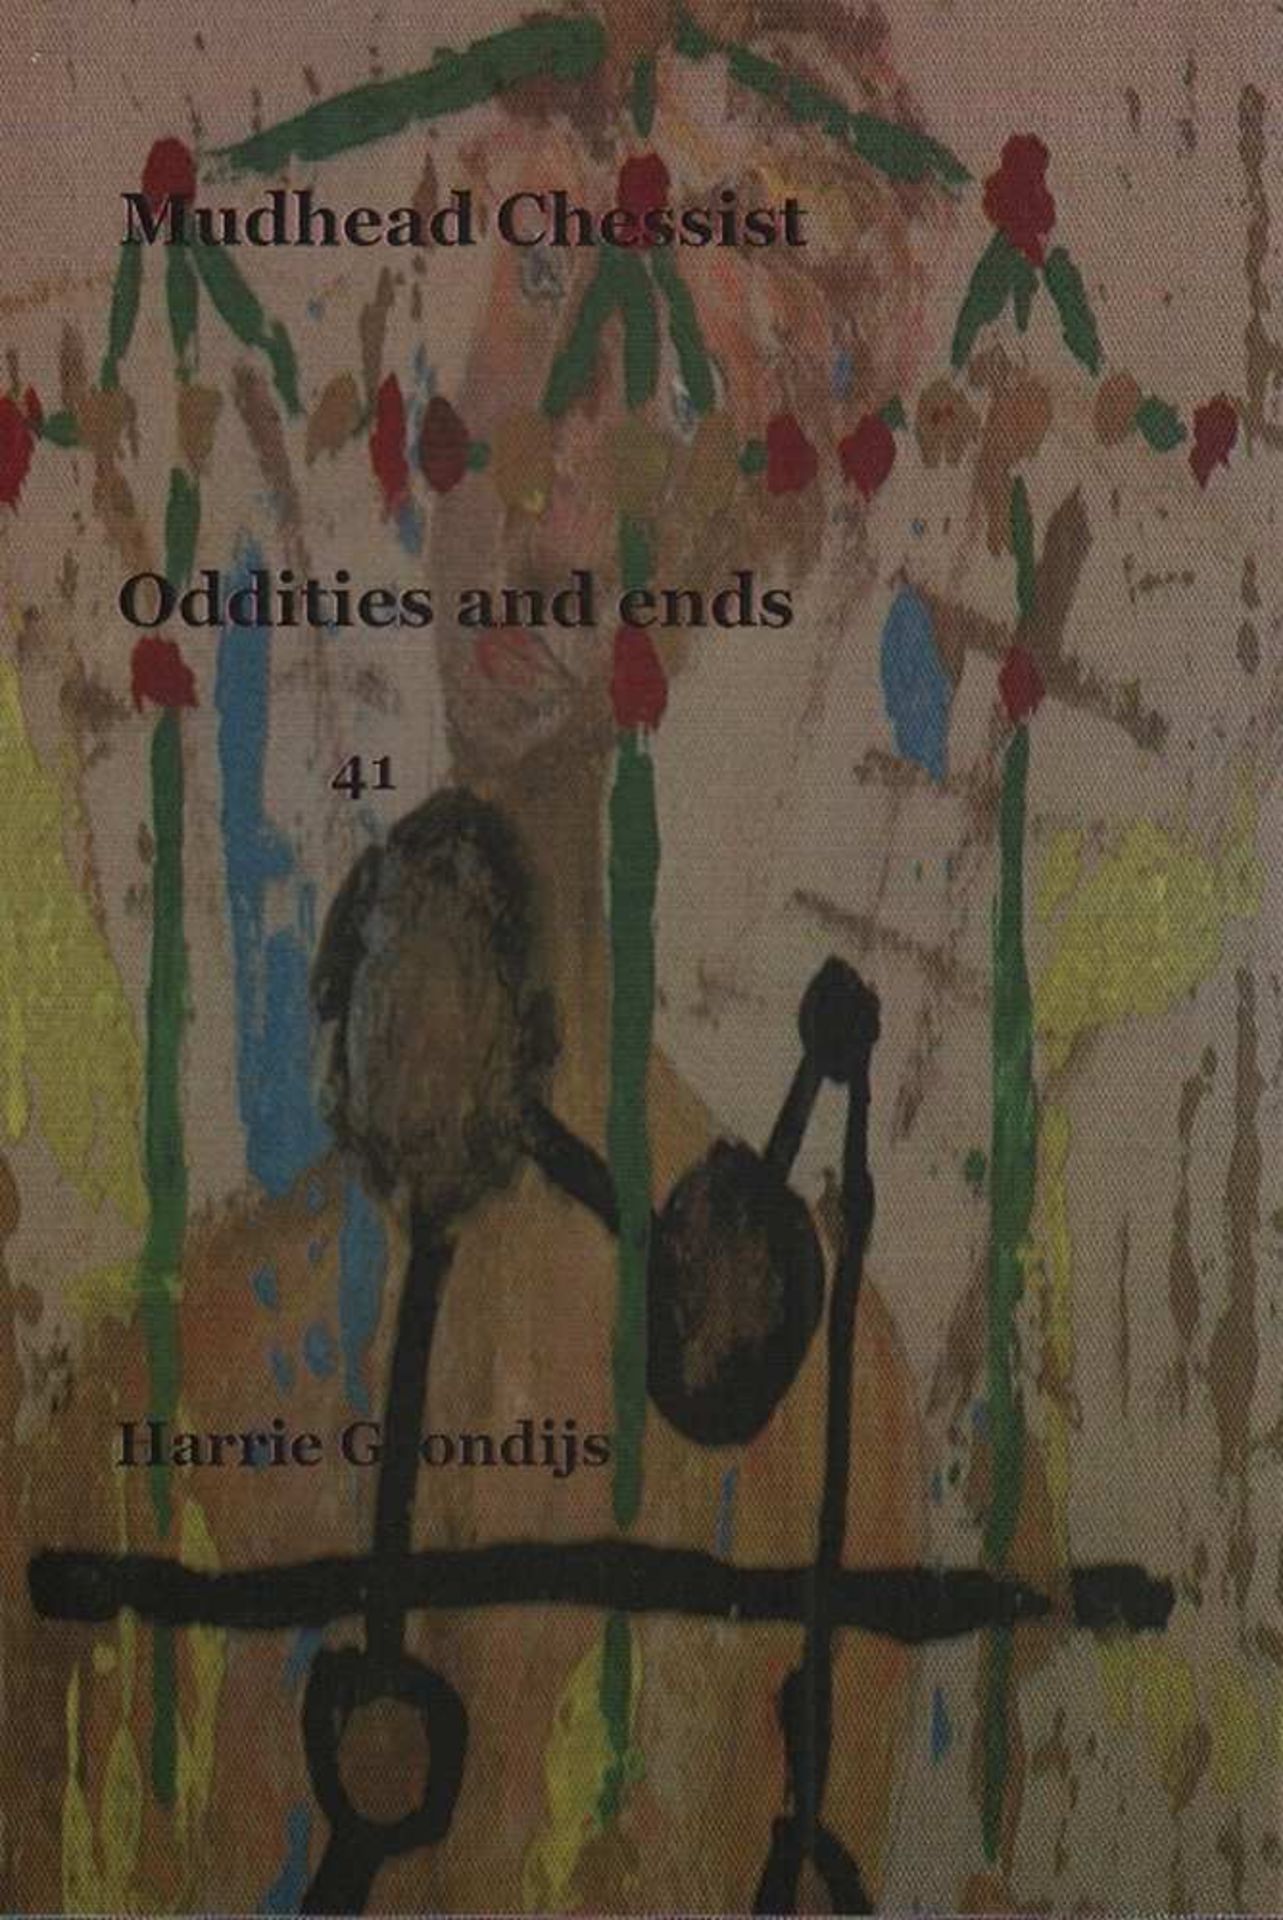 Grondijs, Harrie. Mudhead Chessist. Oddities and Ends. Edited by Rieneke van Zutphen. Maastricht, De